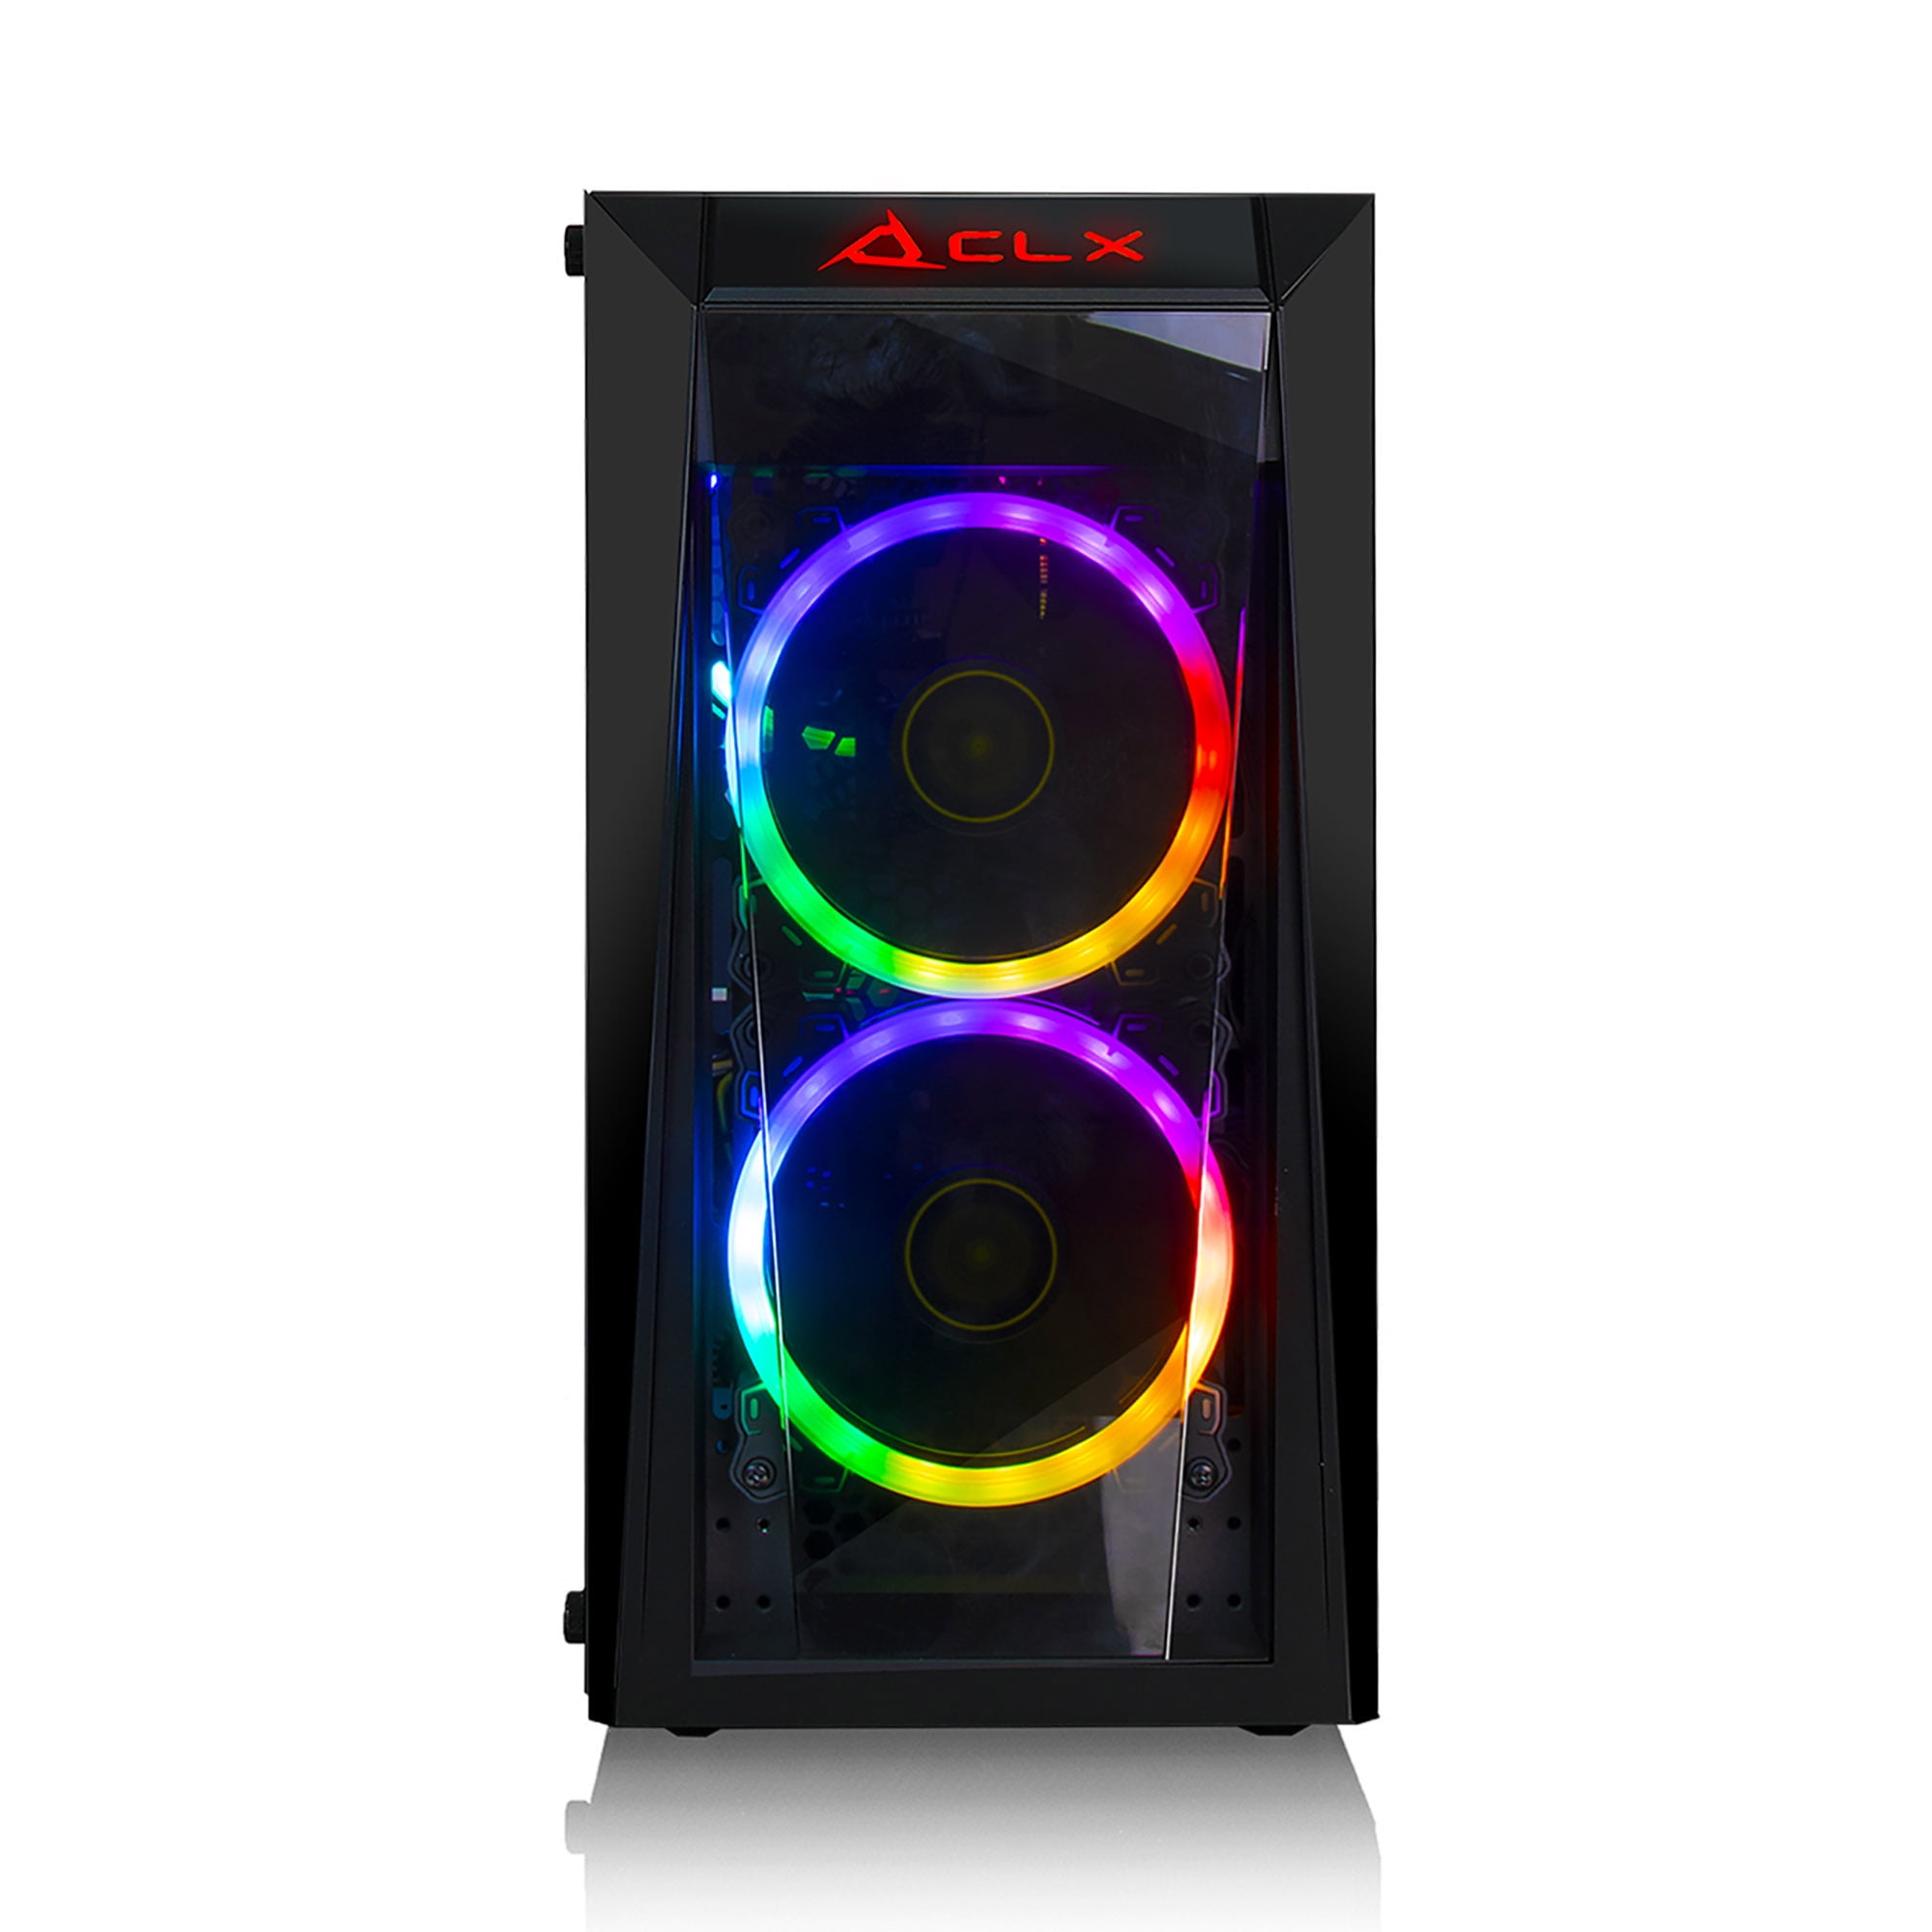 CLX SET VR-Ready Gaming Desktop - AMD Ryzen 9 3900X 3.8GHz 12-Core 